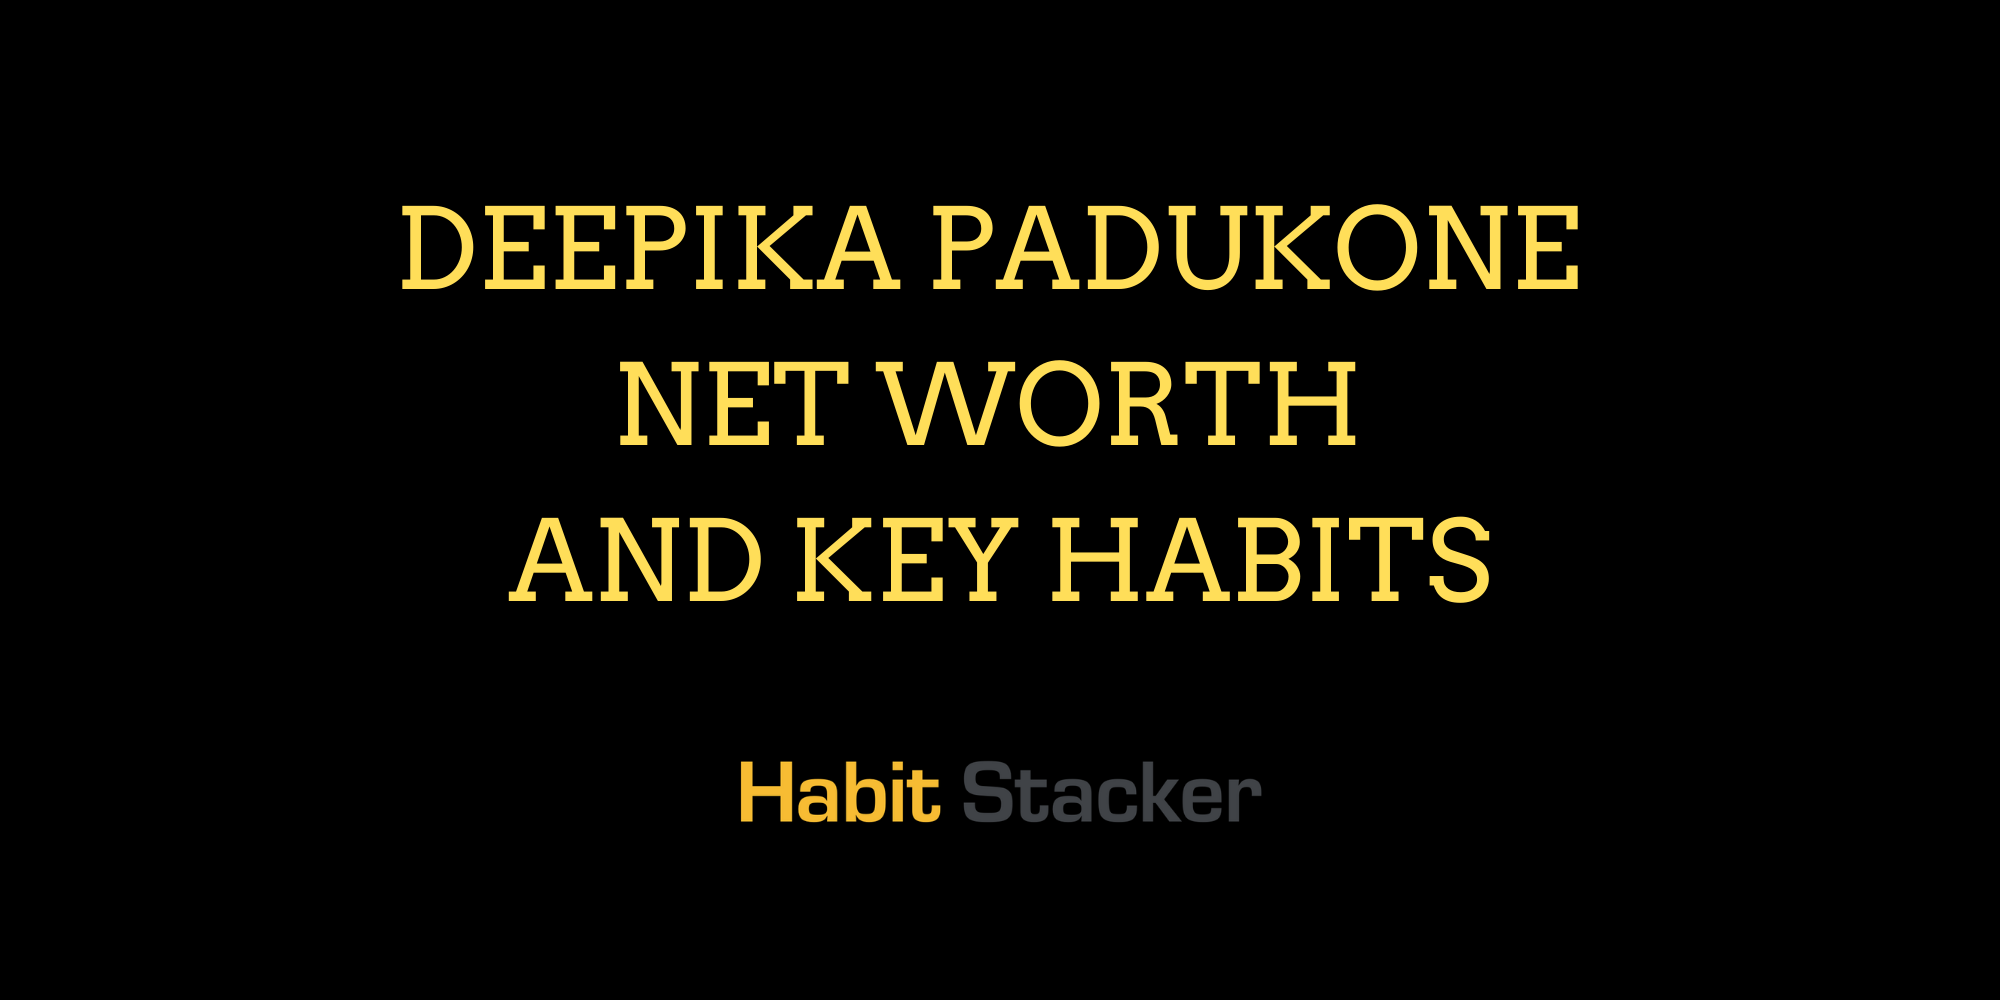 Deepika Padukone Net Worth and Key Habits